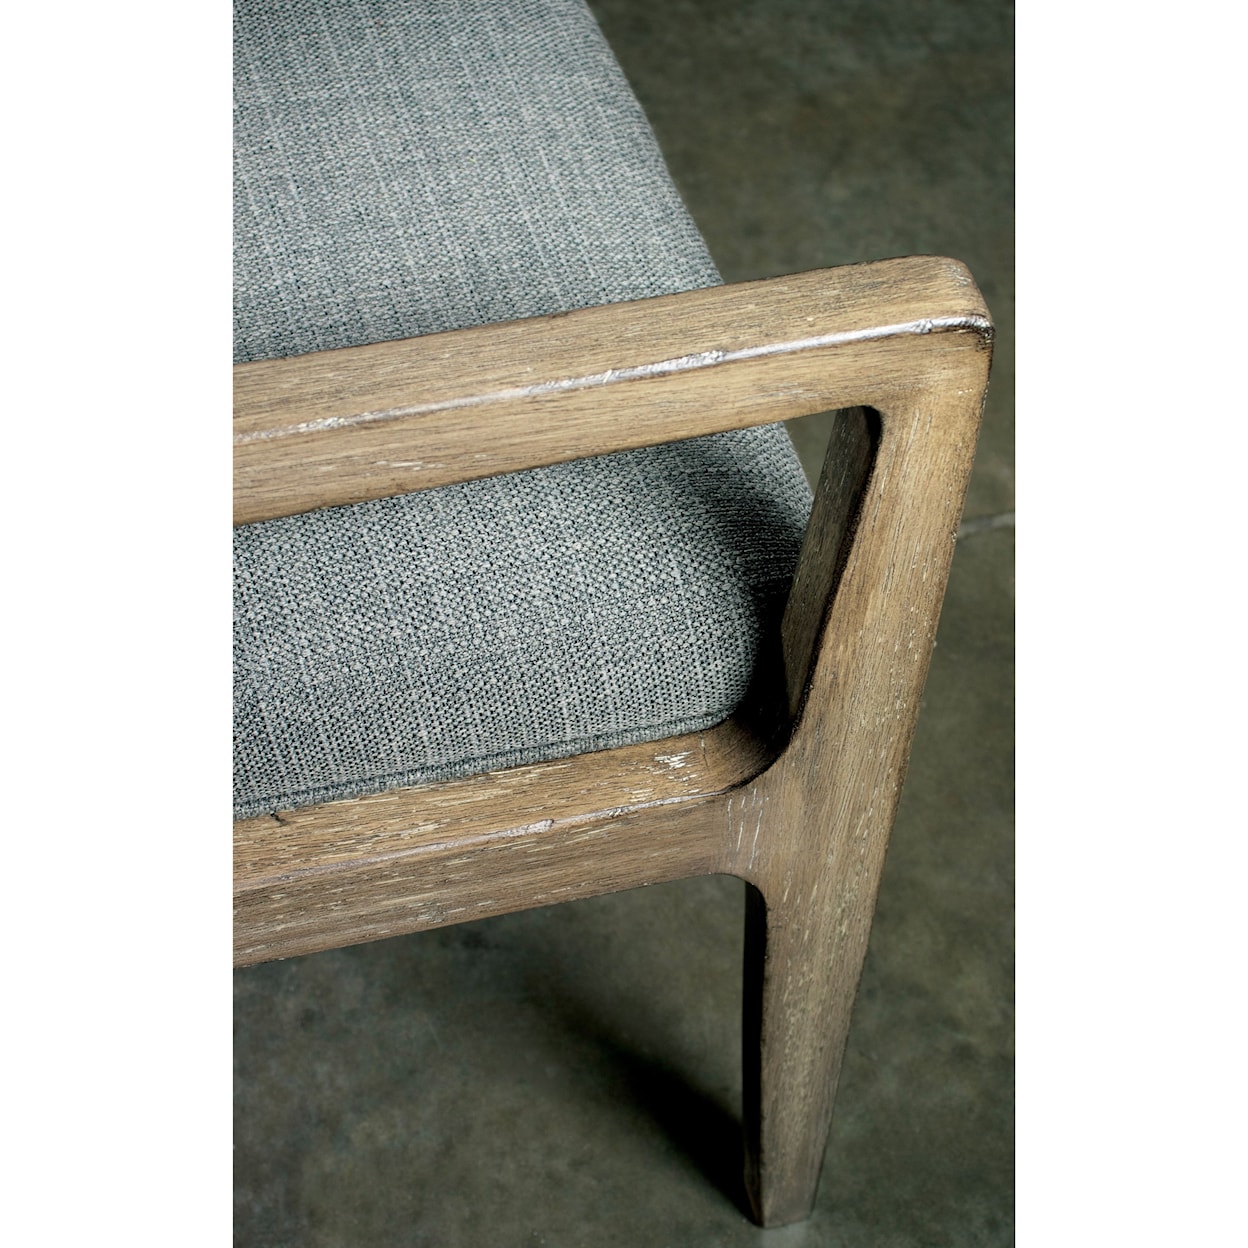 Riverside Furniture Milton Park Upholstered Arm Chair